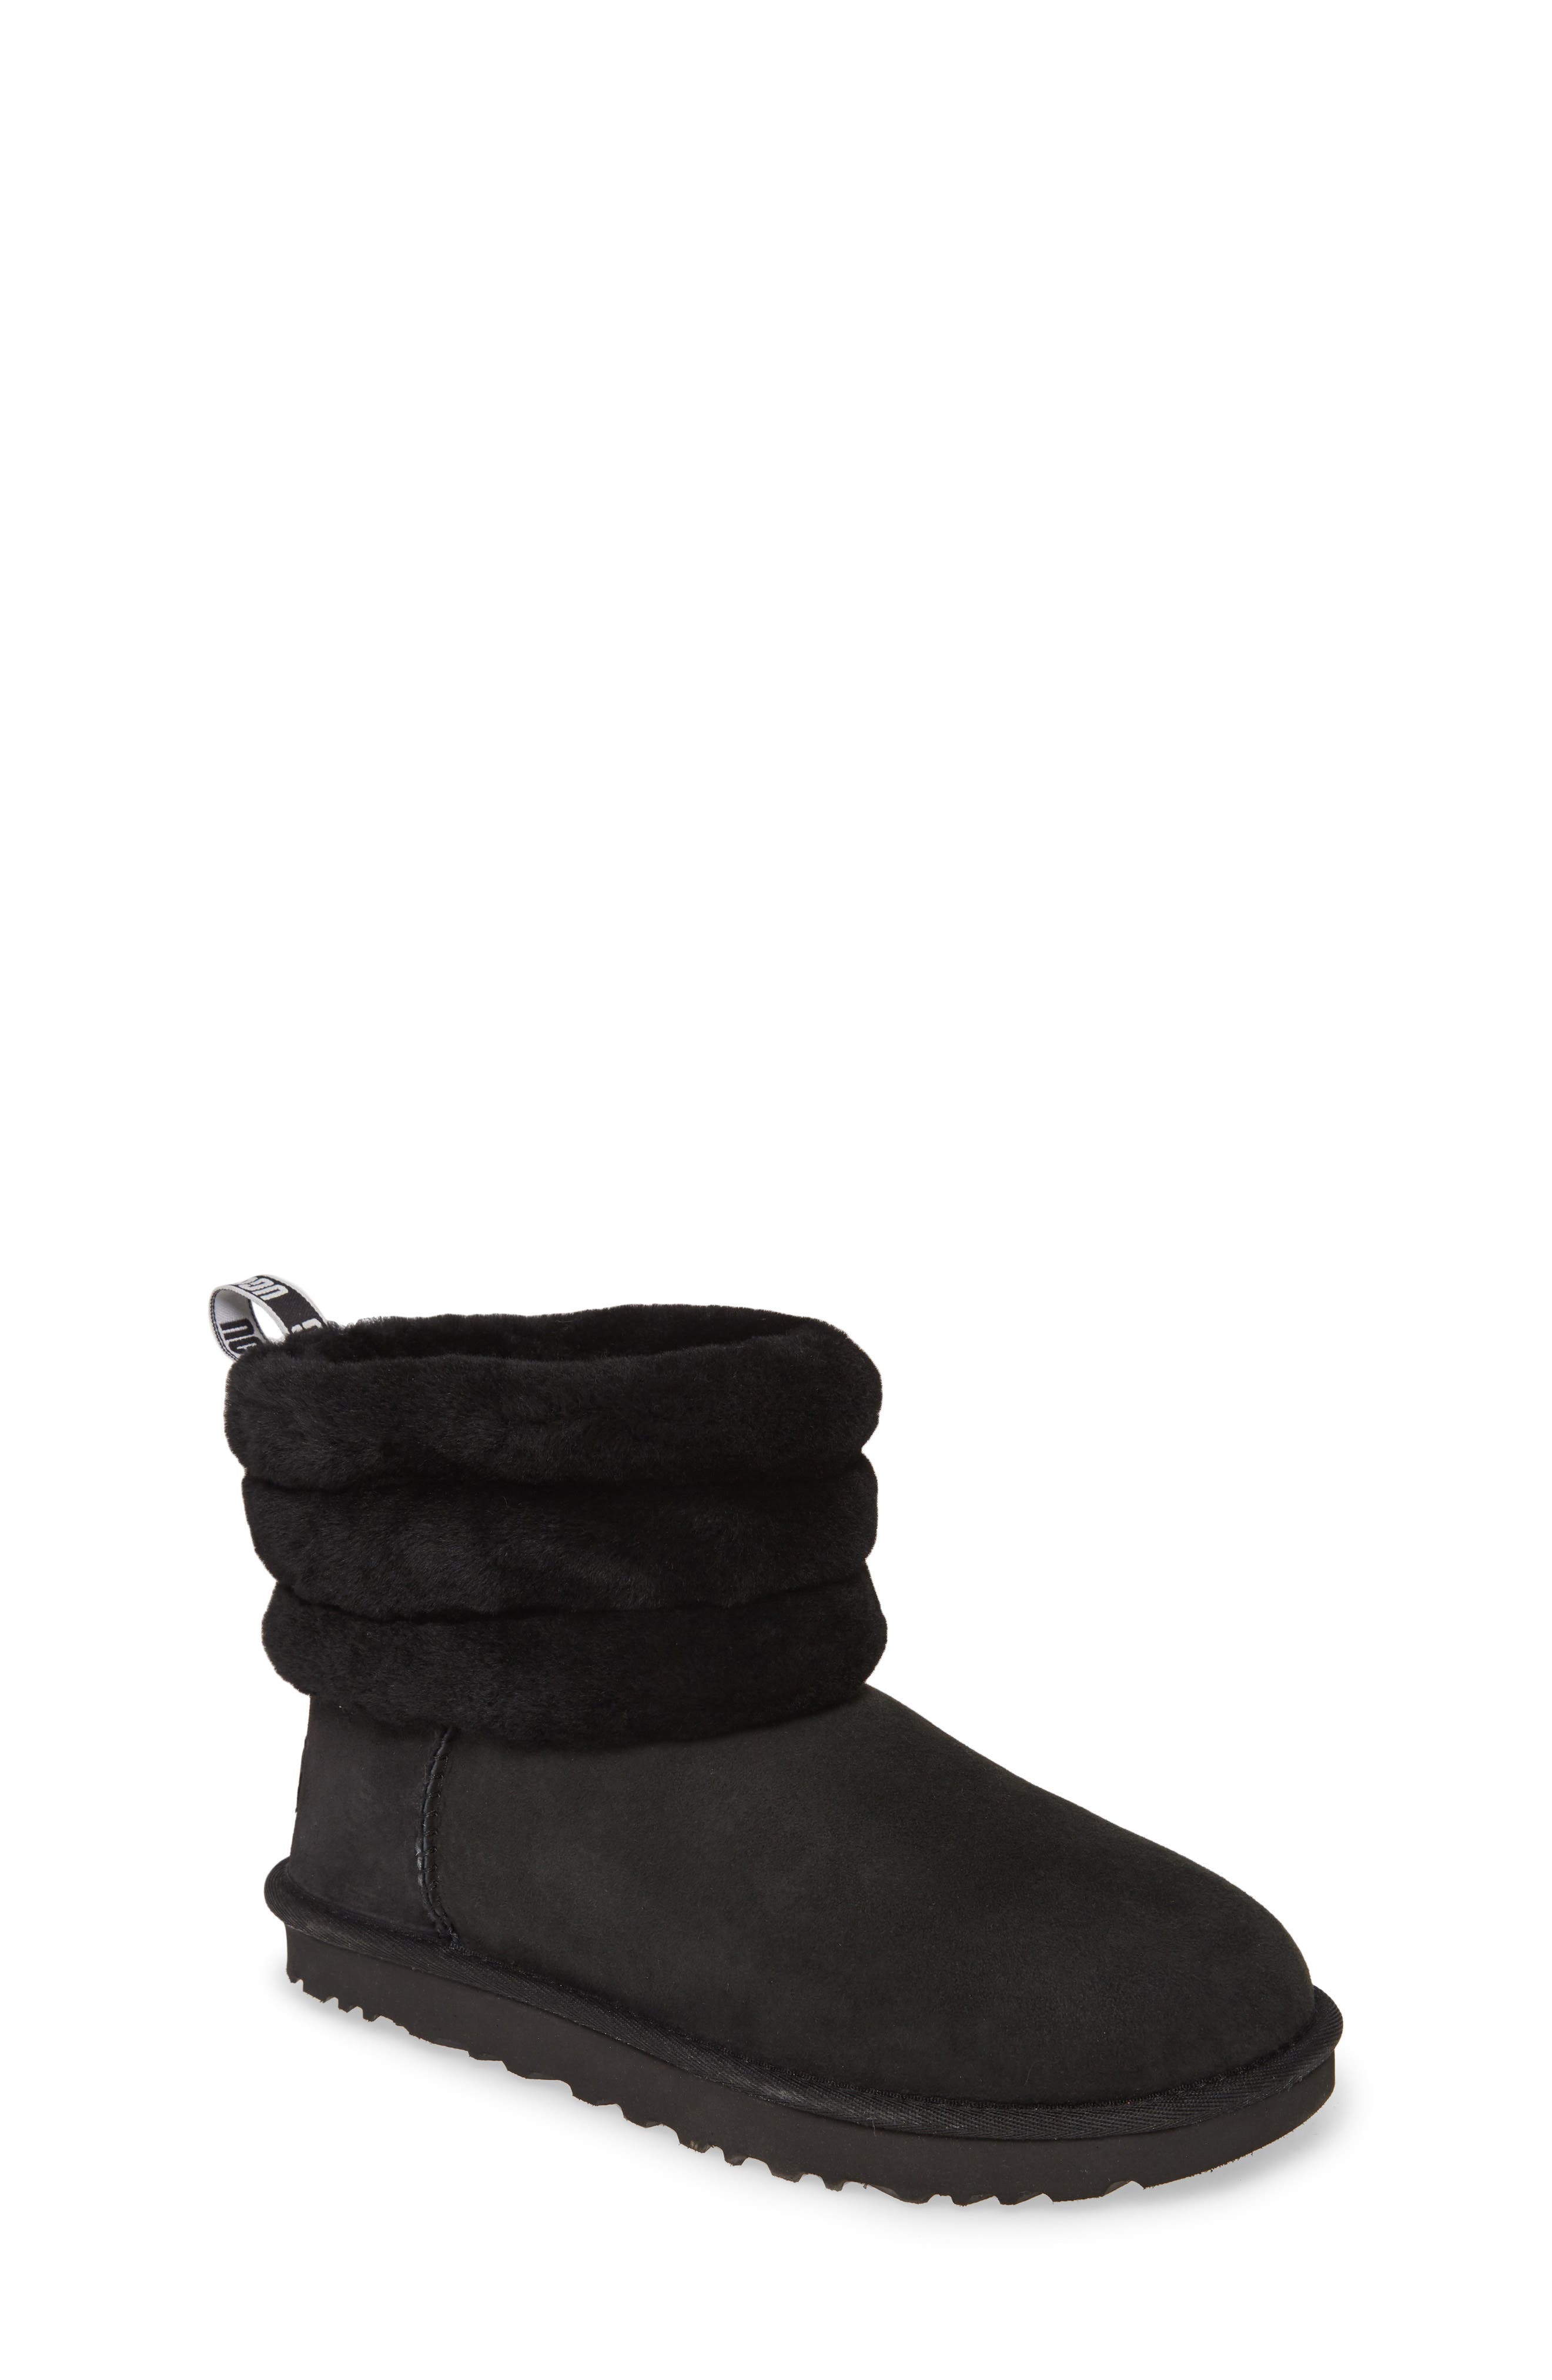 black ugg boots for girls